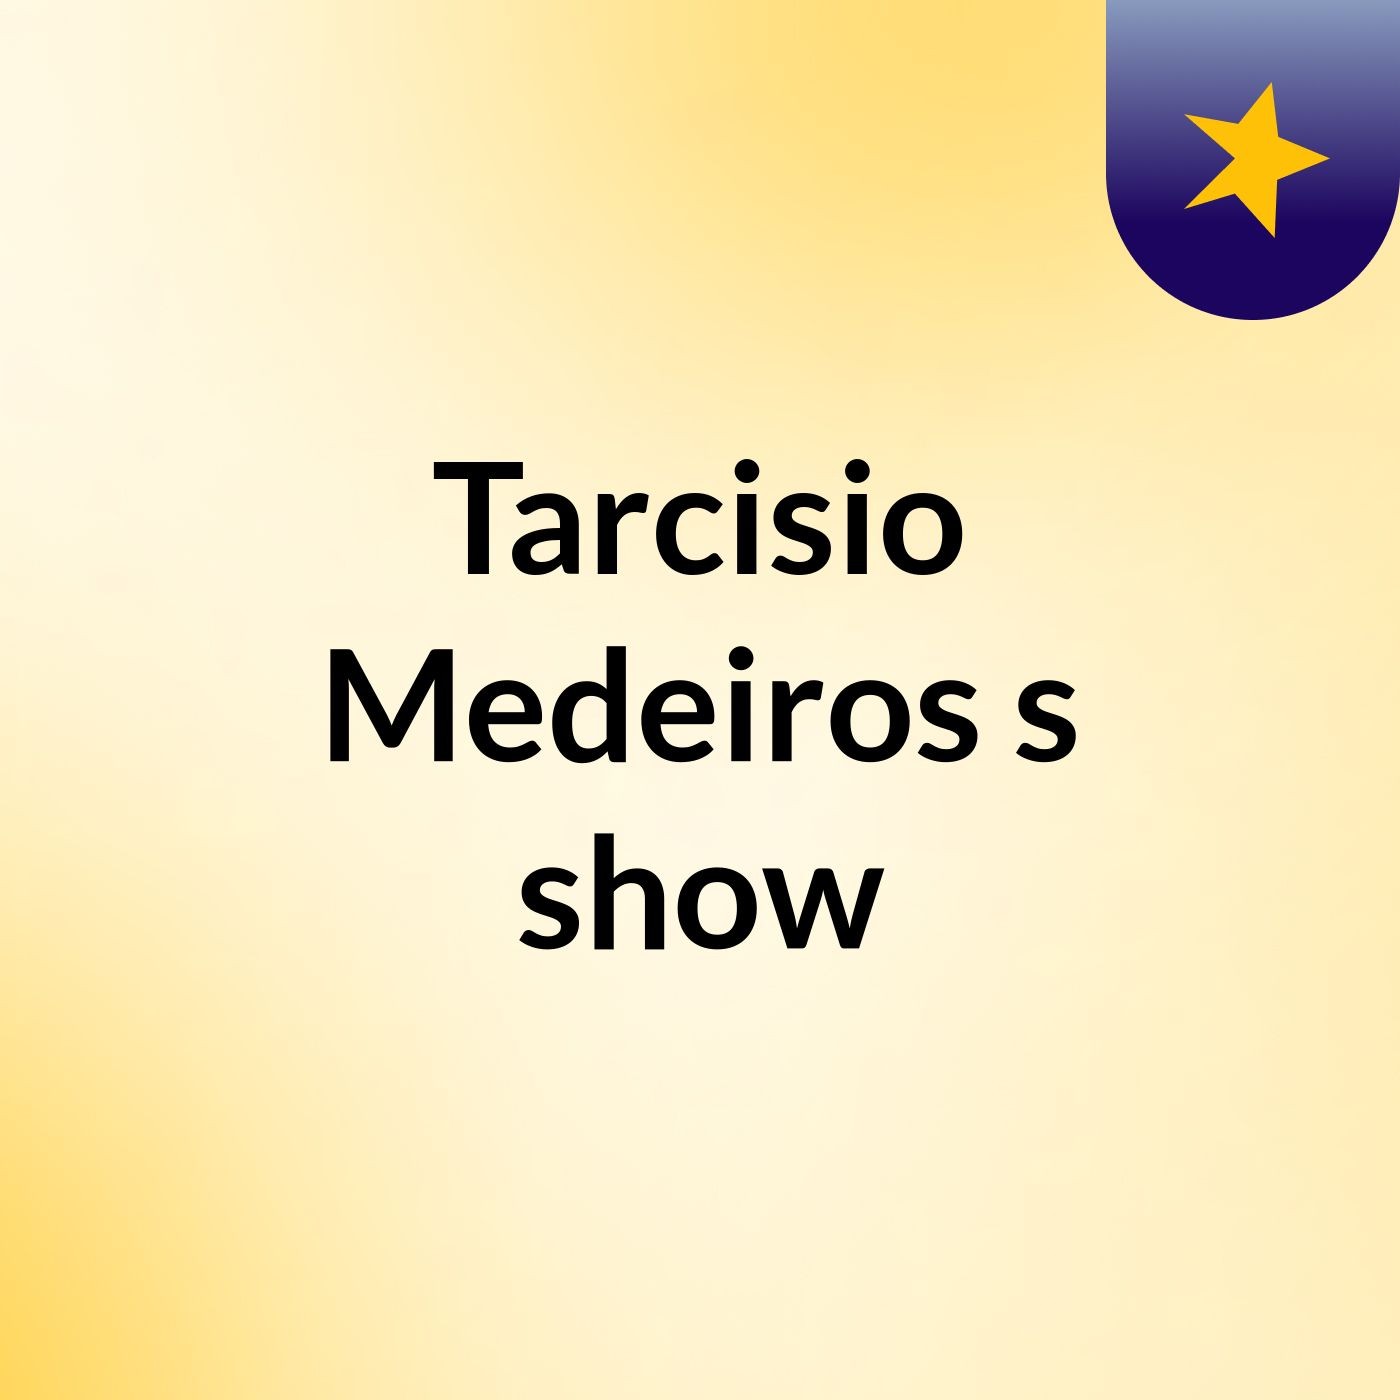 Tarcisio Medeiros's show